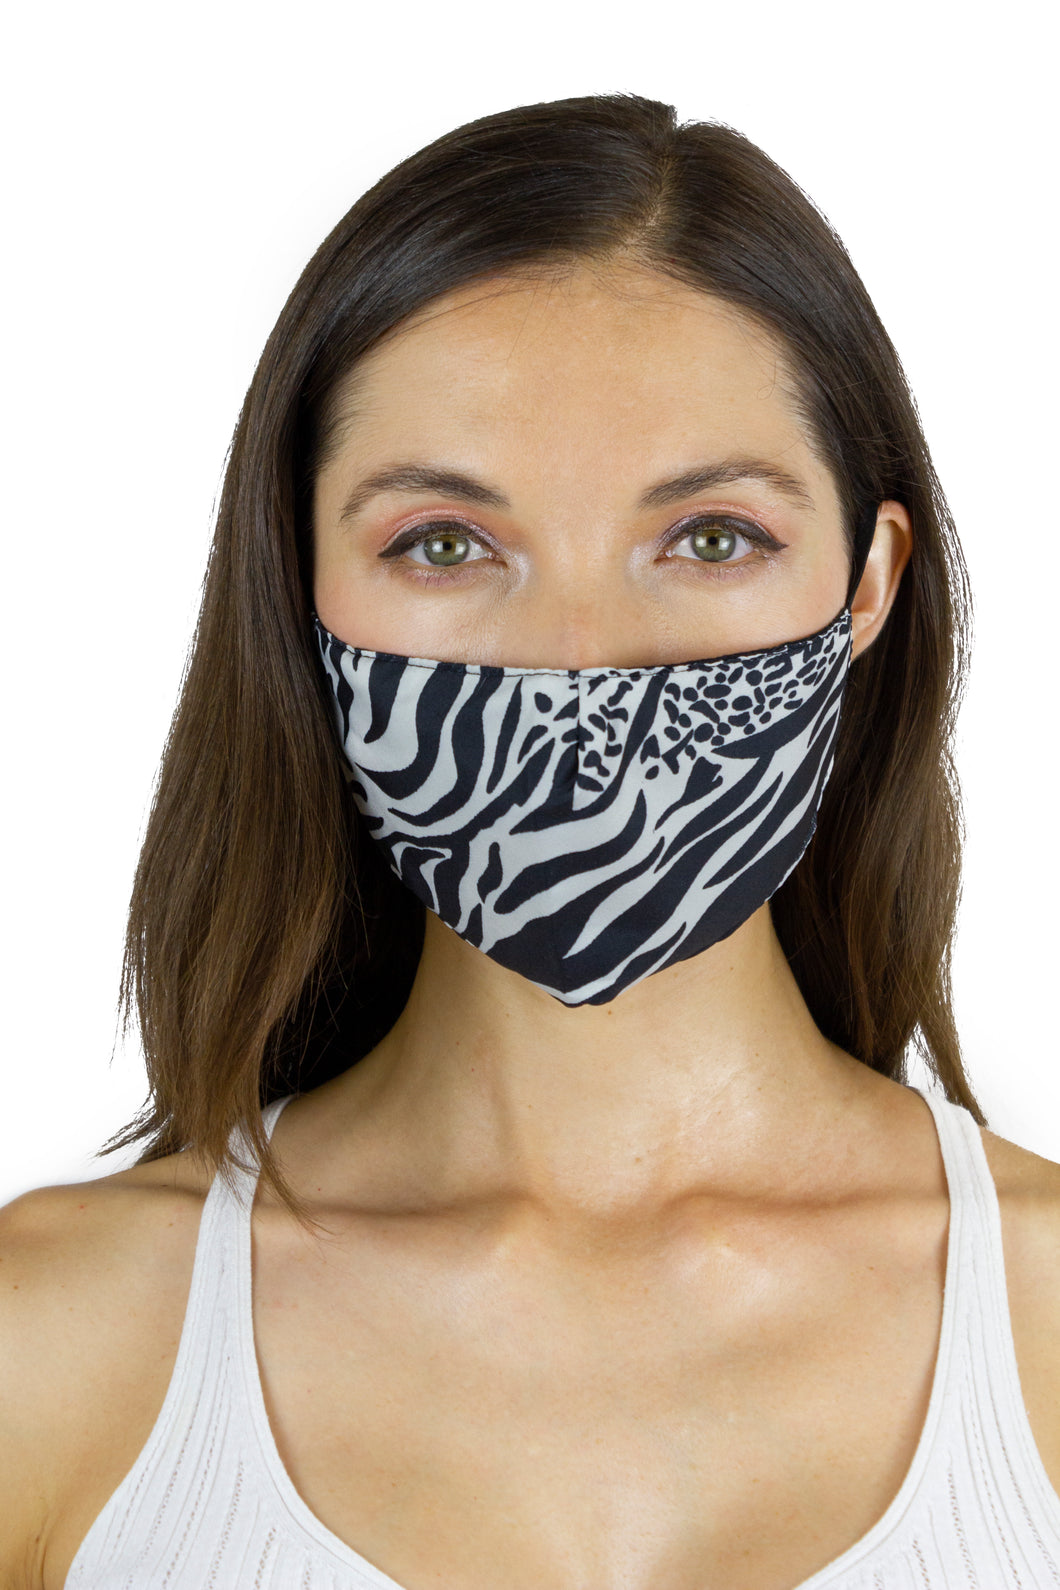 Leopard / Solid Black / Zebra Face Covering - 3pc pack - Just Jamie